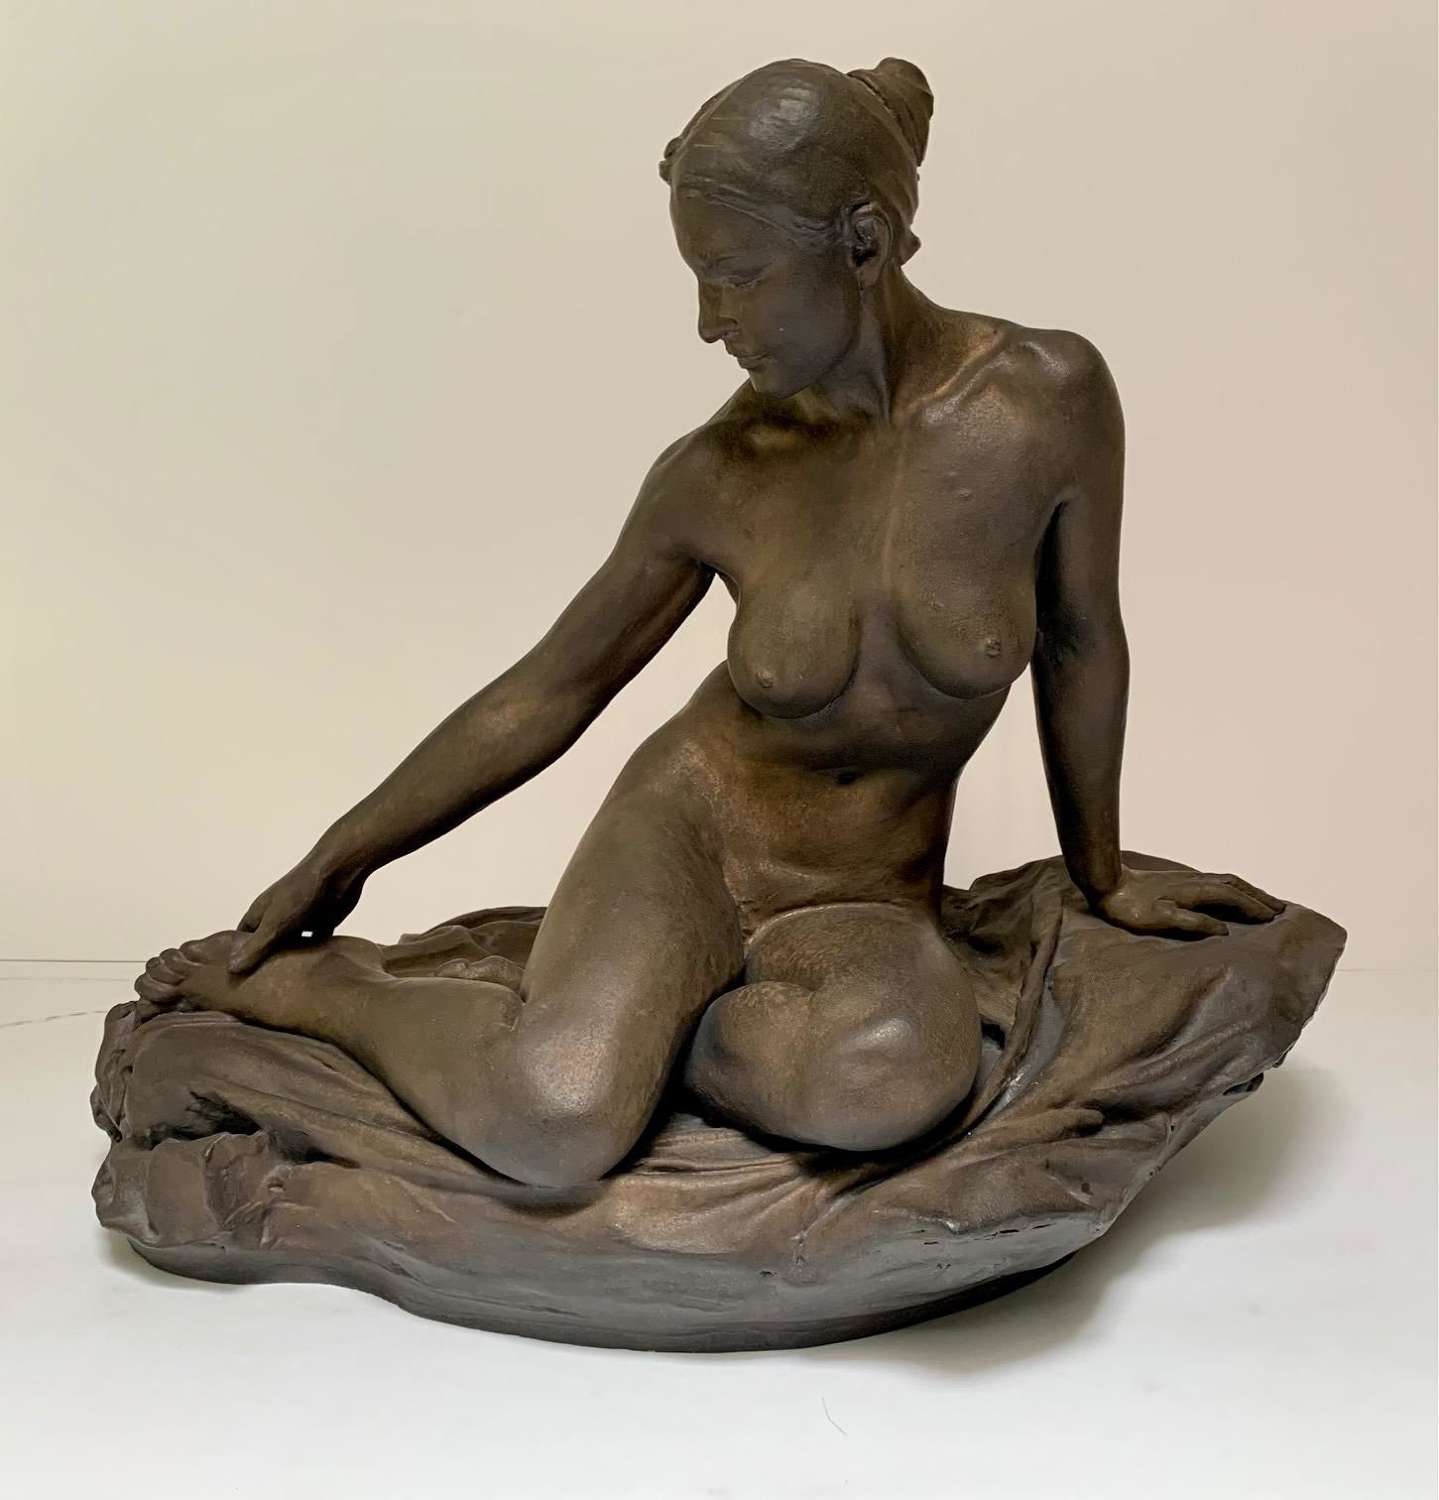 Walter Awlson - A Large Ceramic Figure of a Seated Nude